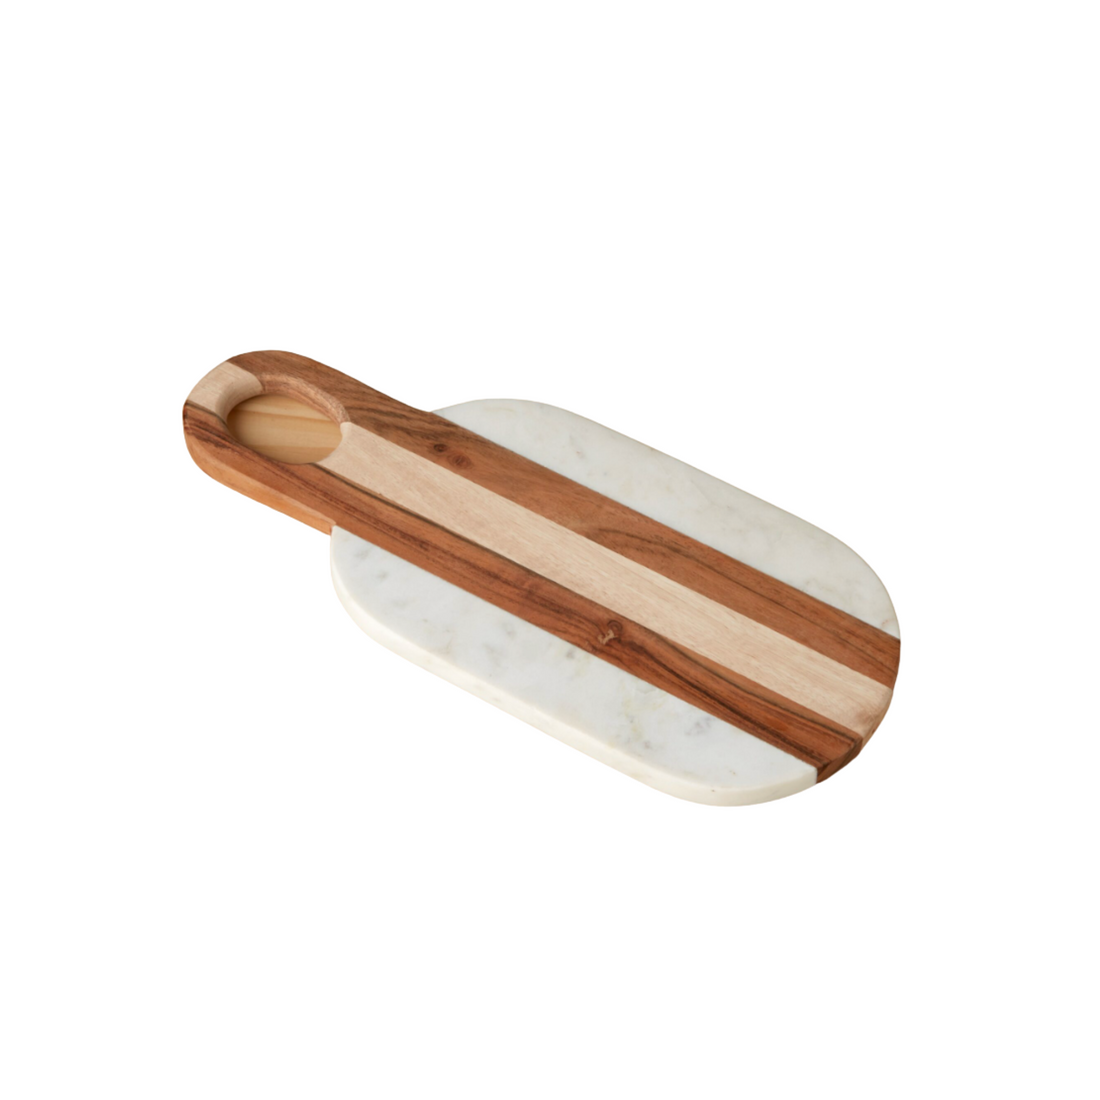 Marble + Wood Oval Board